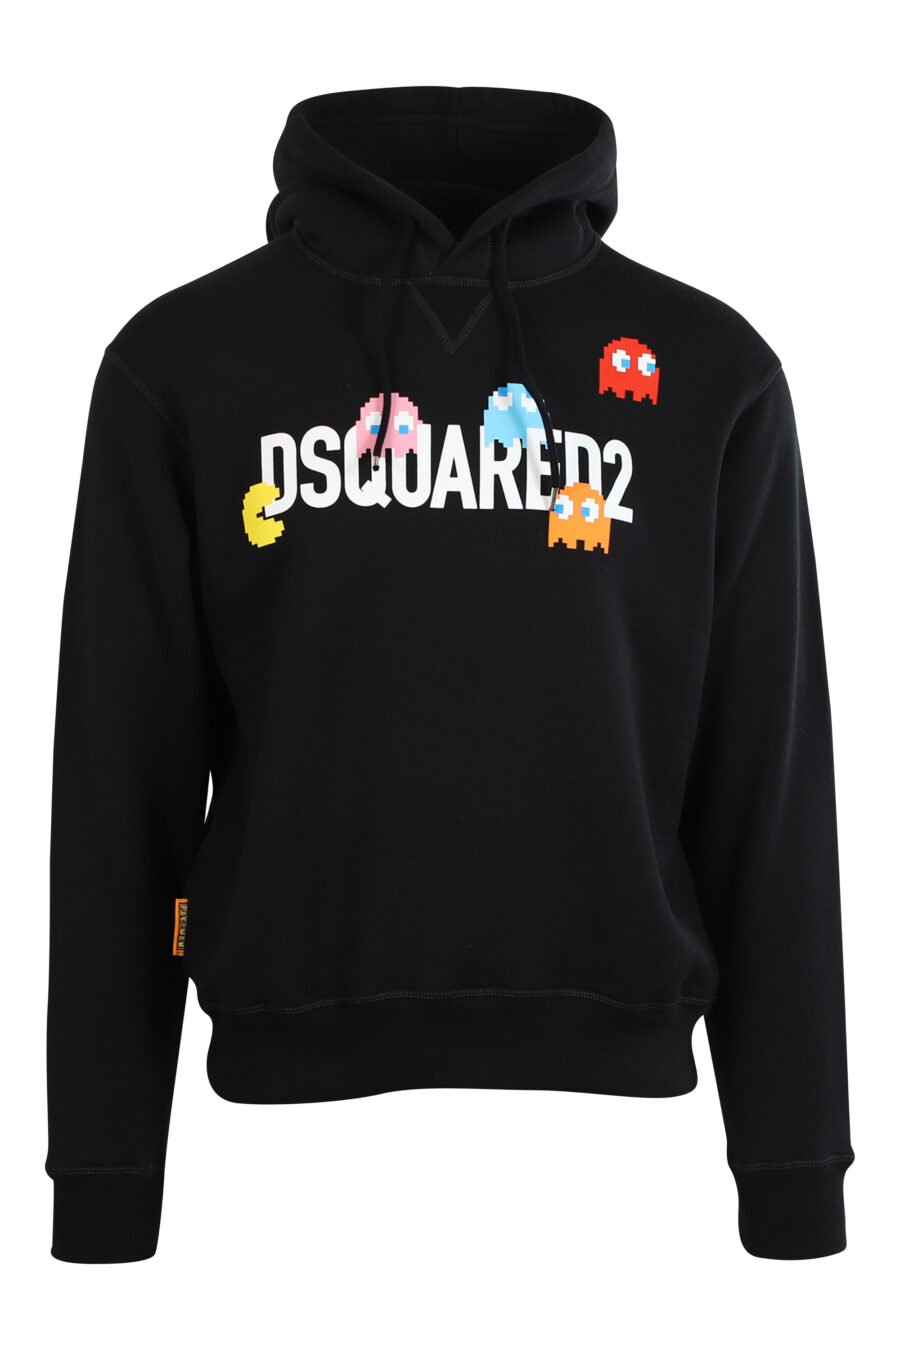 Black hooded sweatshirt with maxilogo "pac-man" - 8054148204082